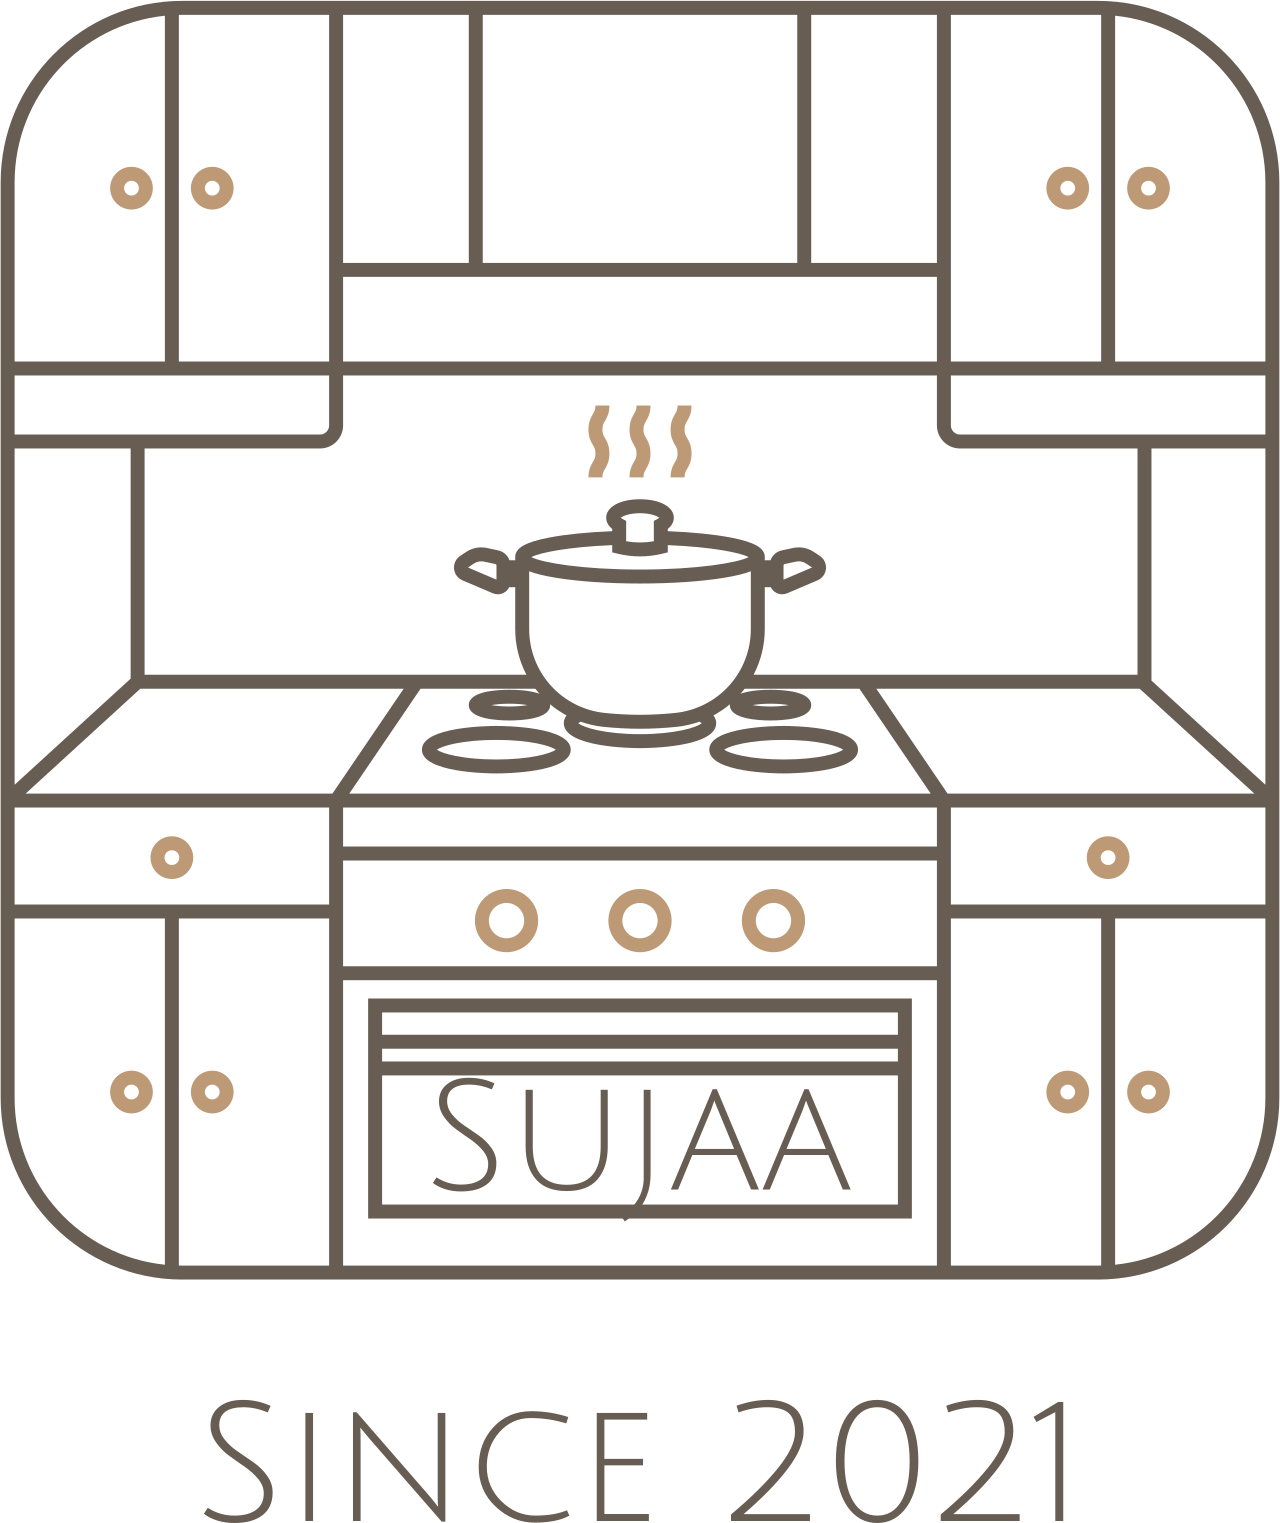 Sujaa's logo